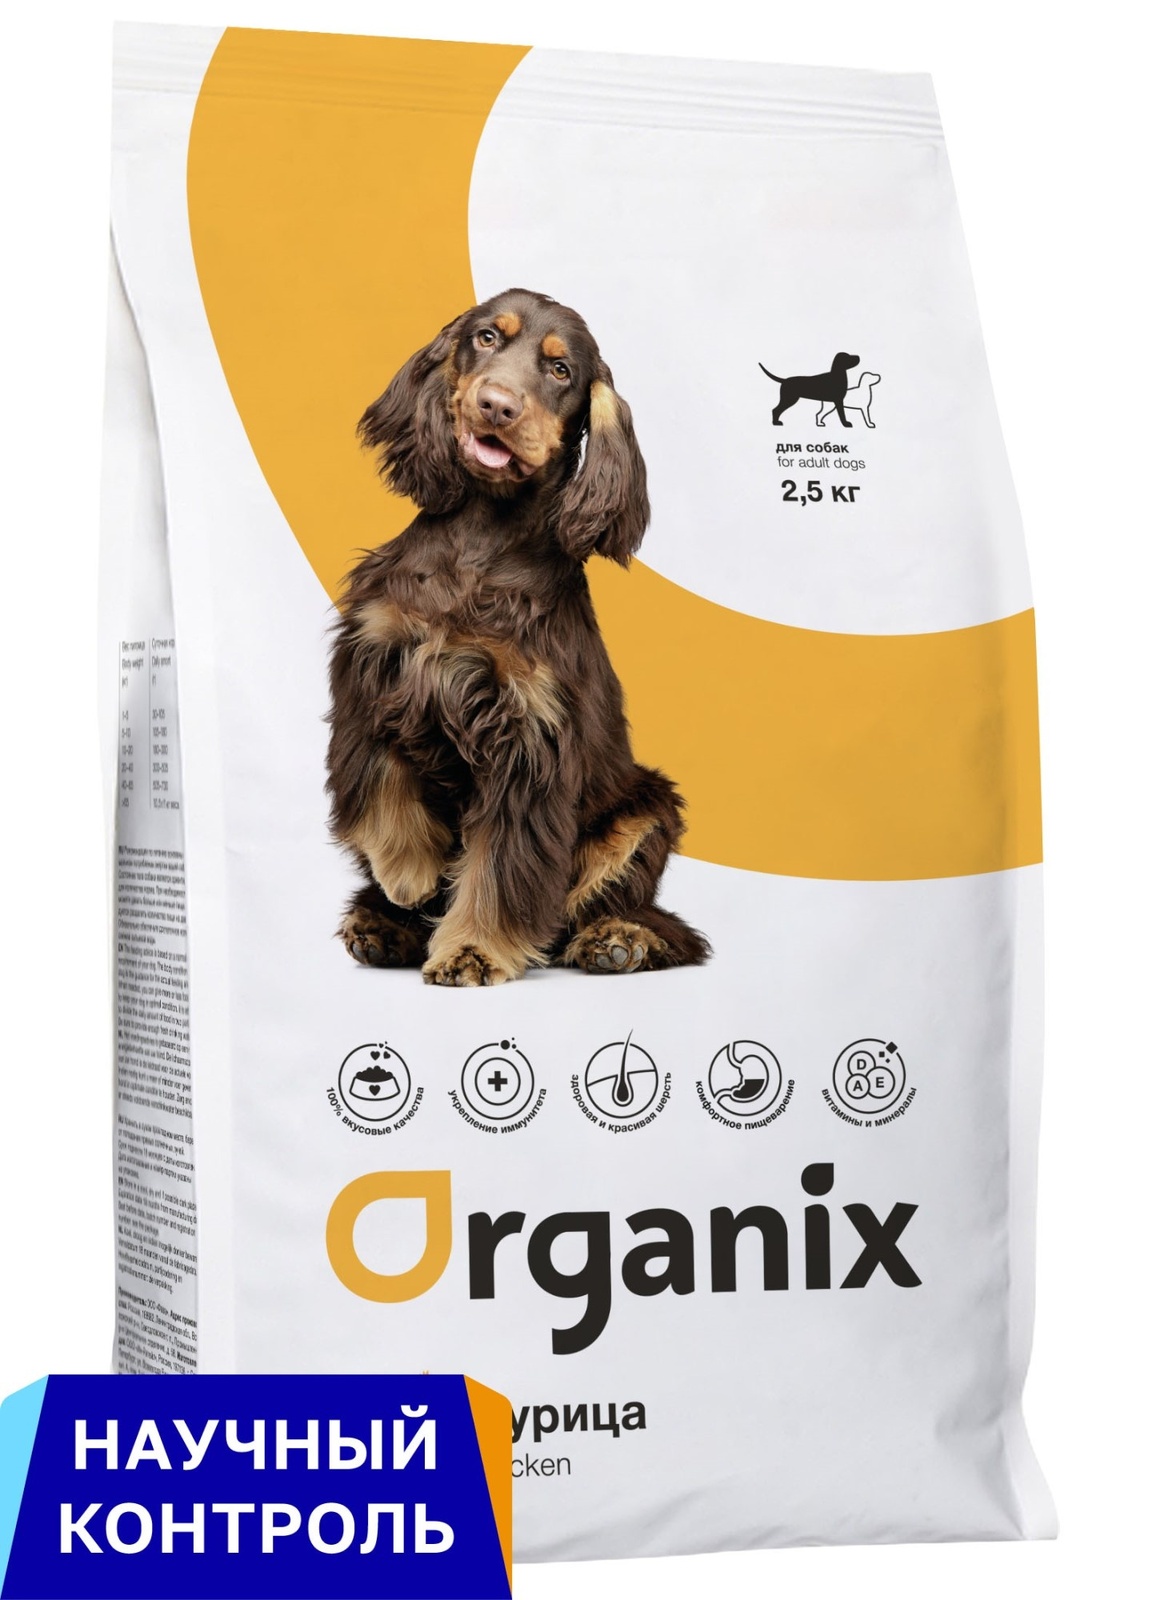 Organix Organix сухой корм для собак, с курицей и рисом (2,5 кг)